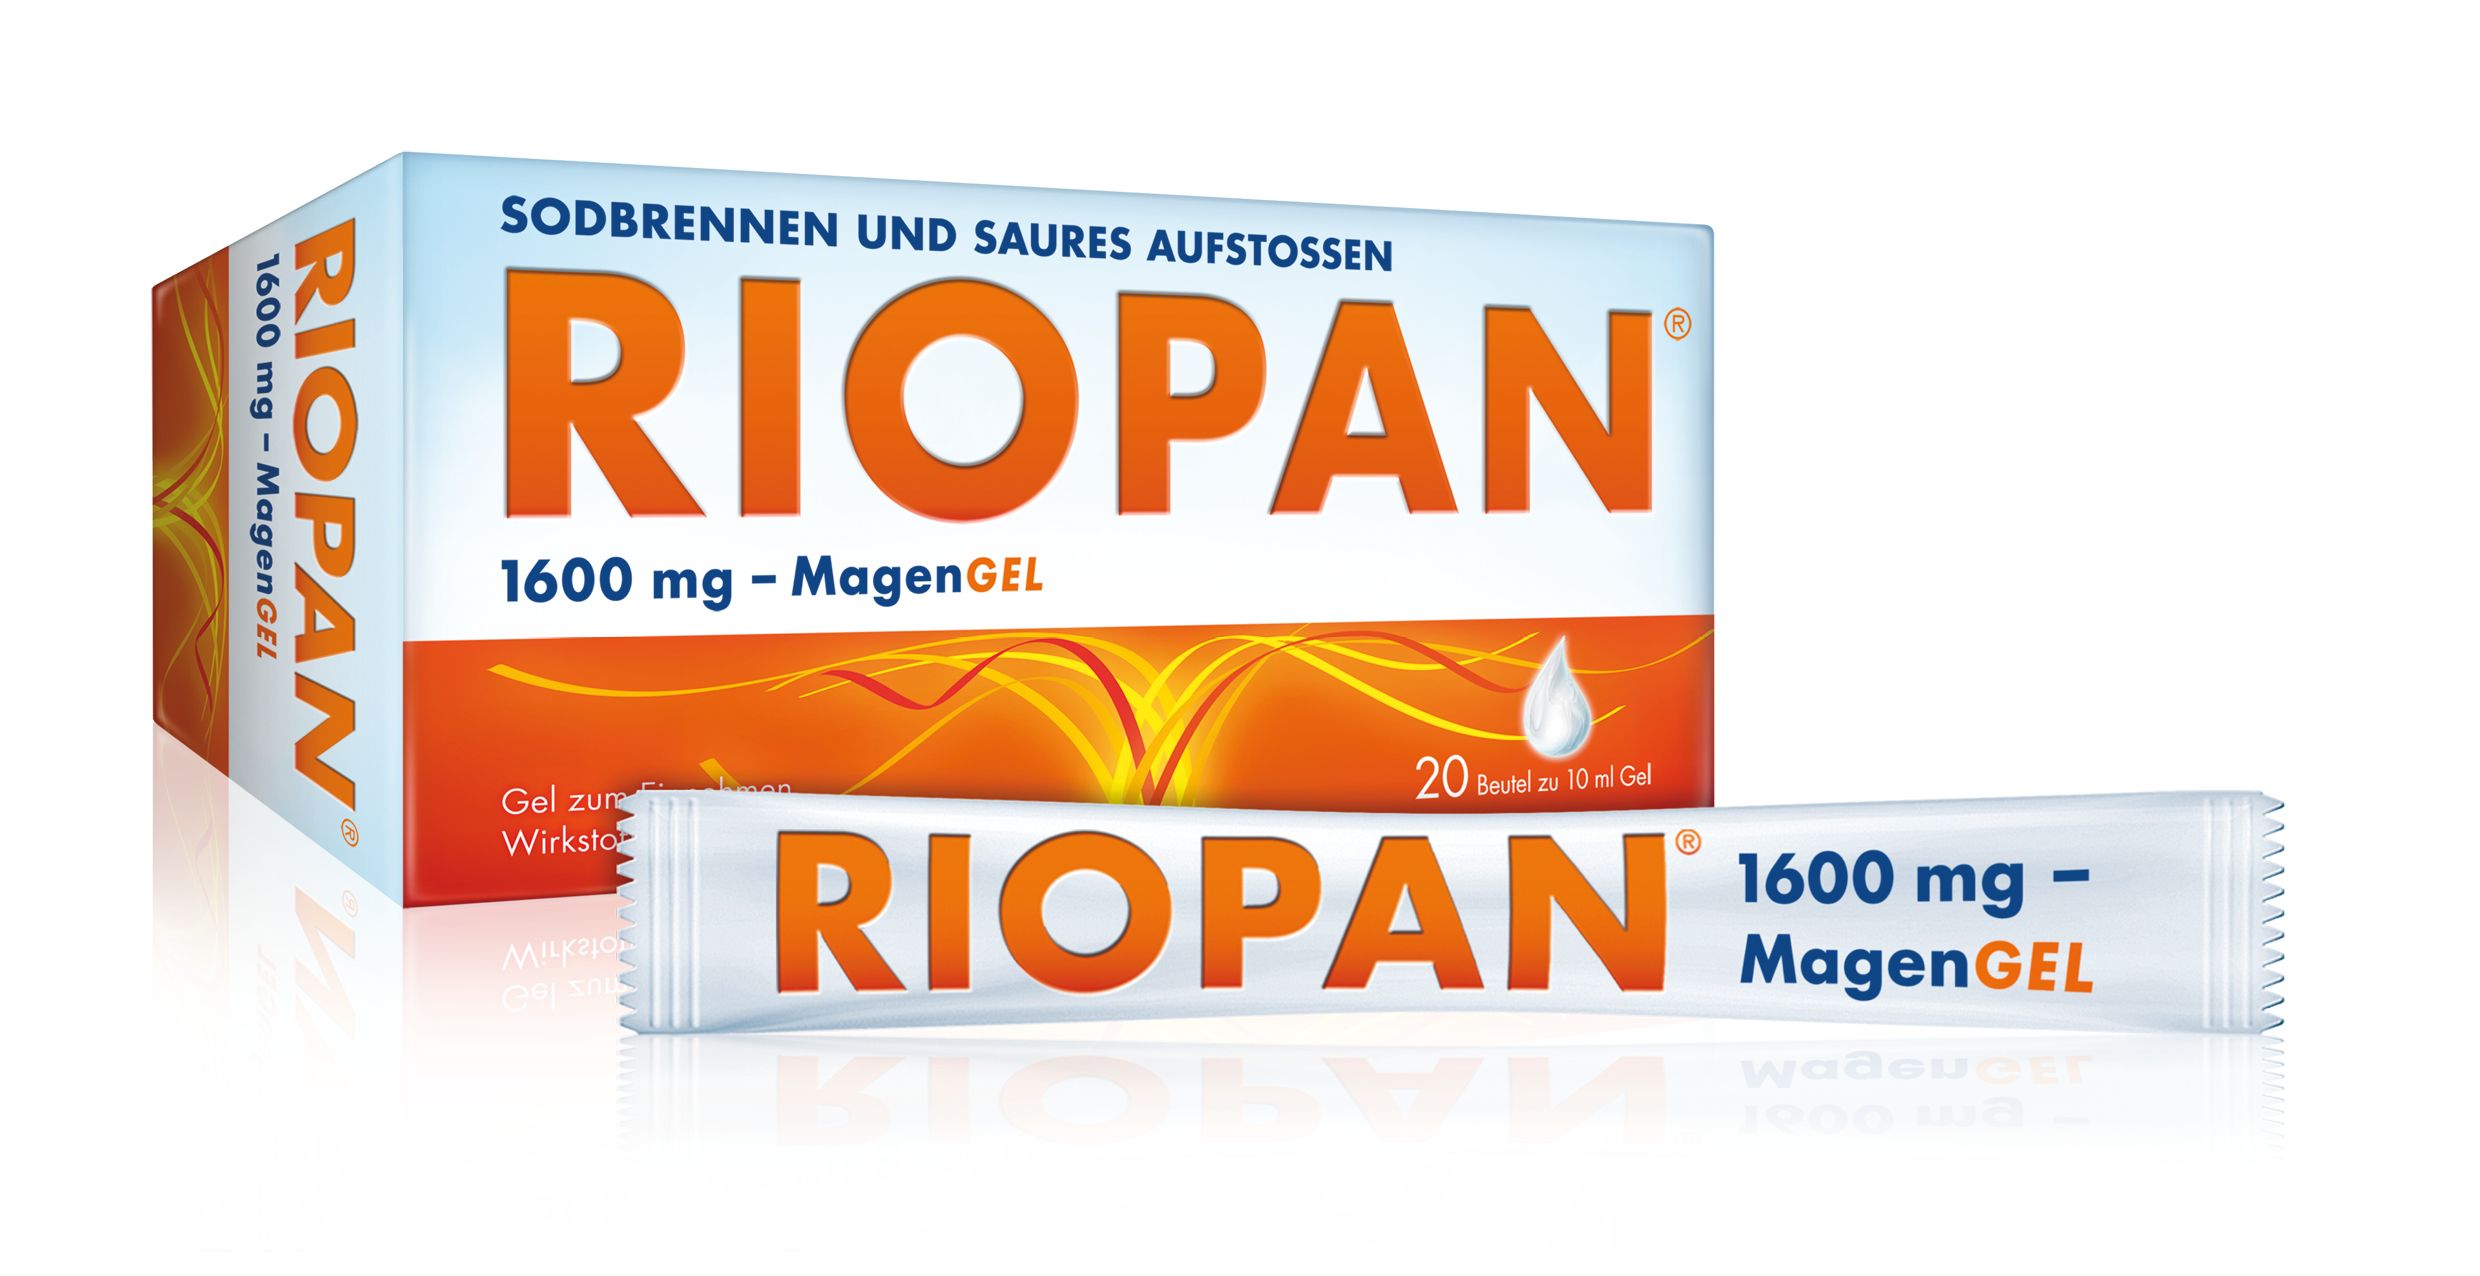 Abbildung Riopan 1600 mg - MagenGel